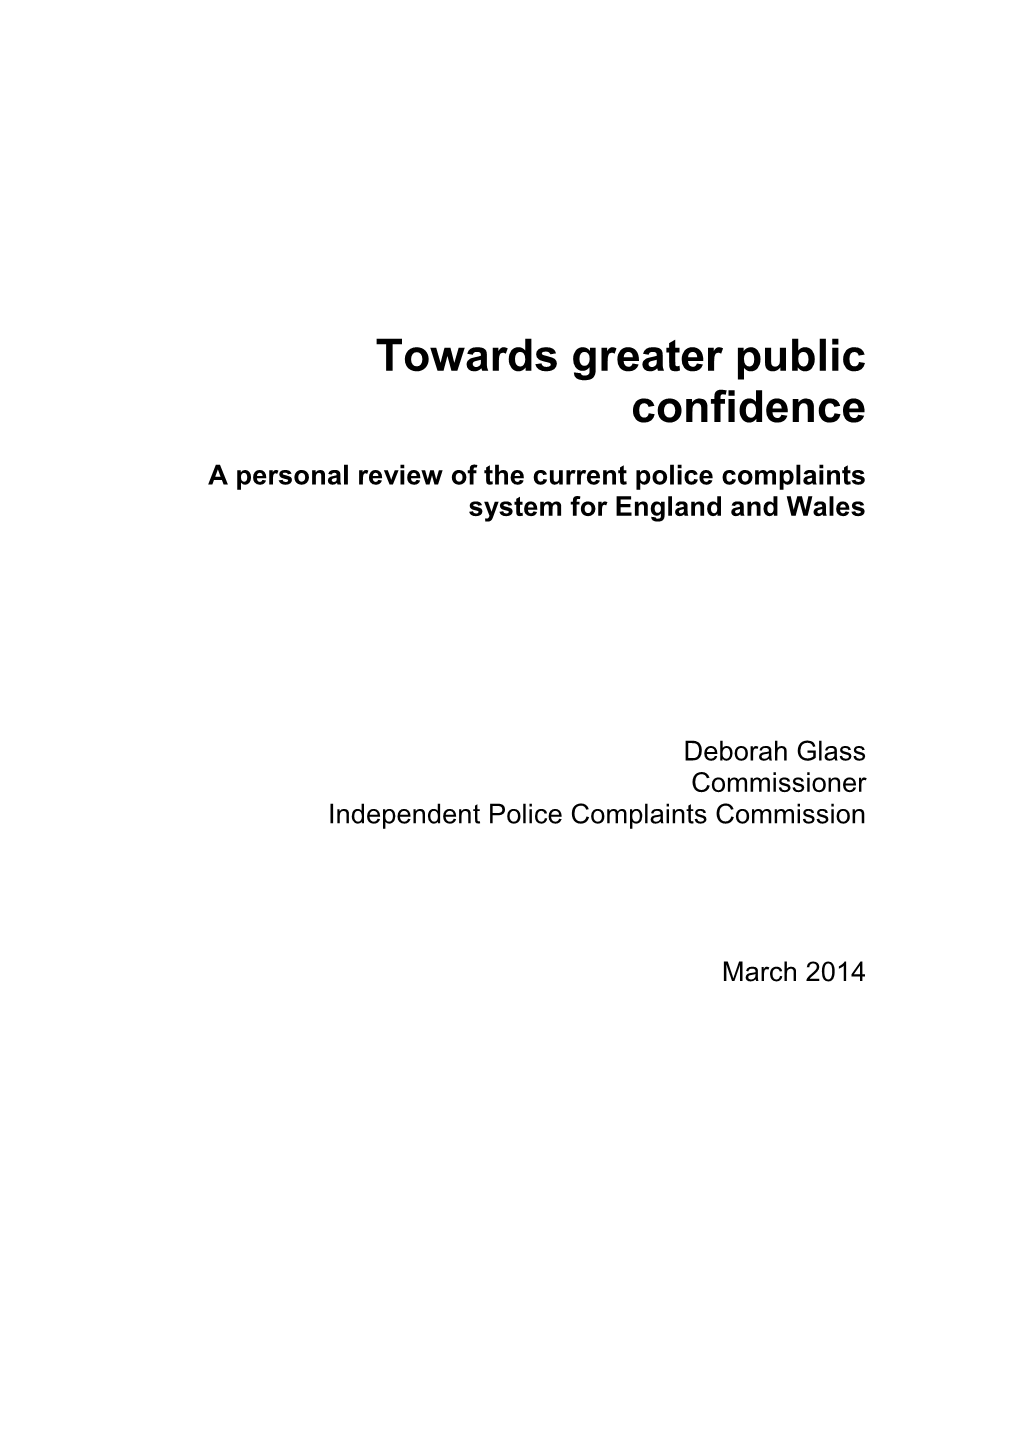 Towards Greater Public Confidence